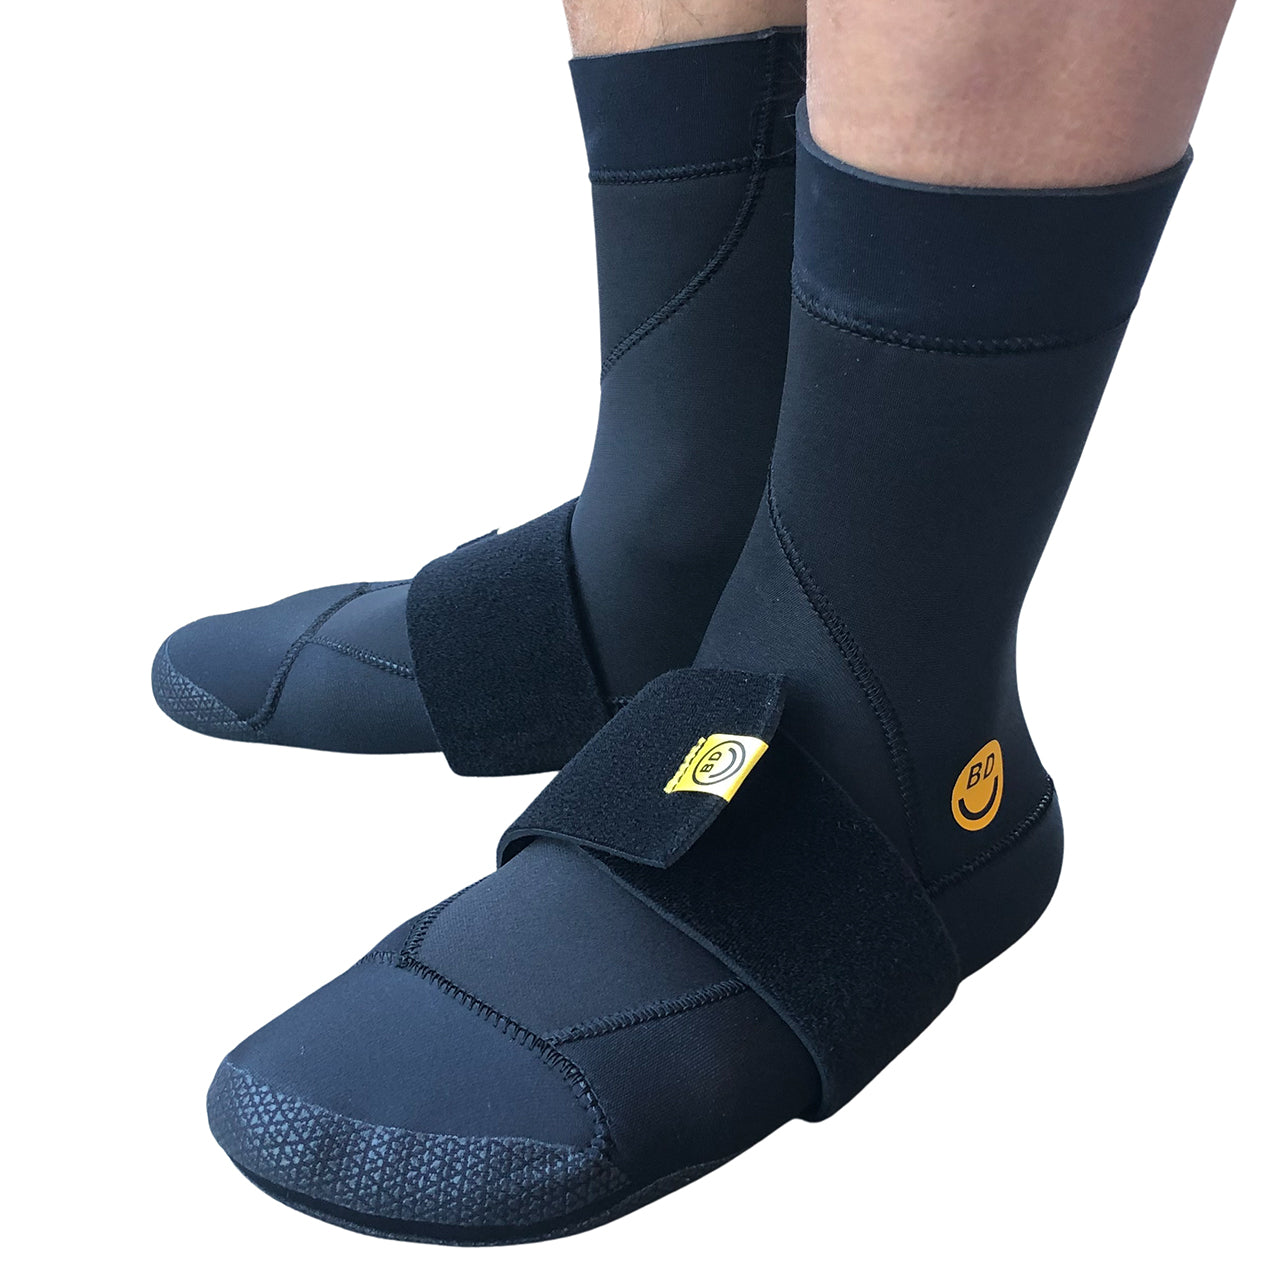 3mm winter socks high type